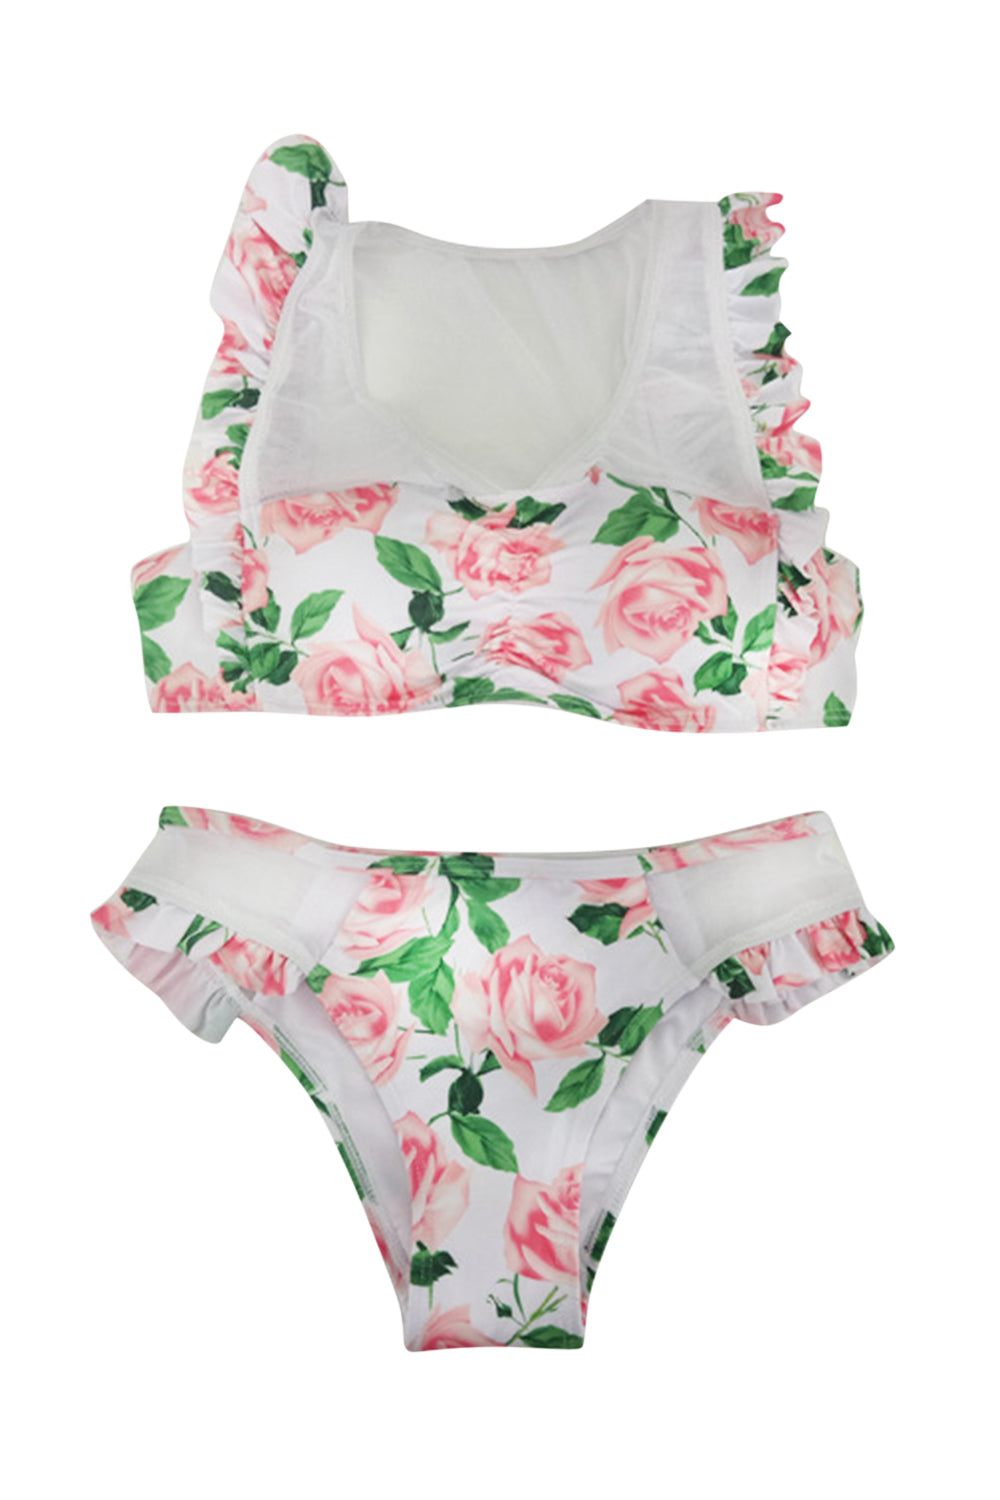 Iyasson Pink Floral Printing Two-piece Swimwear